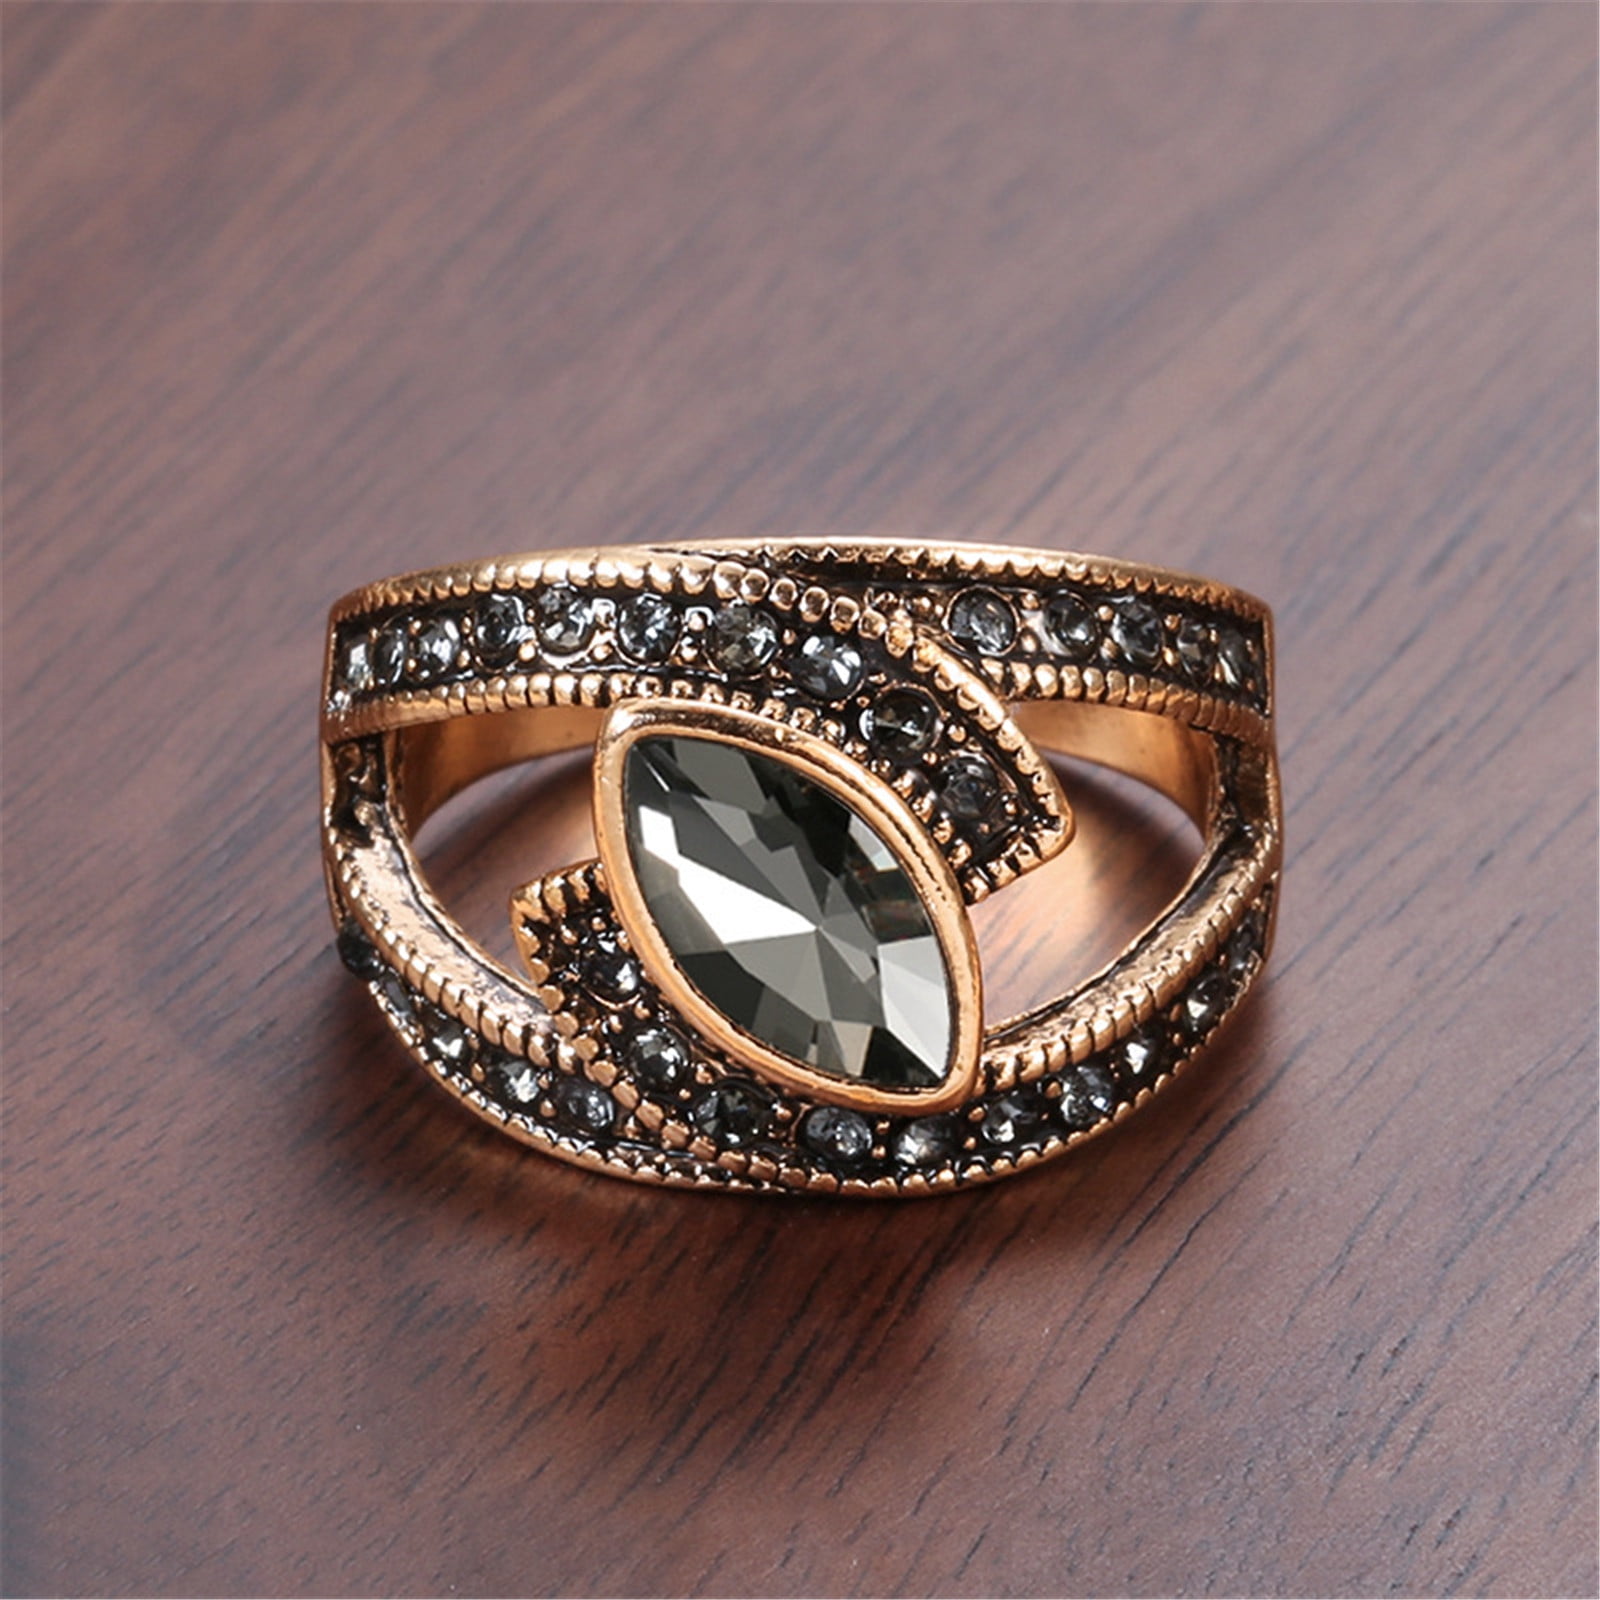 22k Gold Ring Beautiful Multi Stone Studded Ladies Jewelry Select Size  Ring20 | eBay